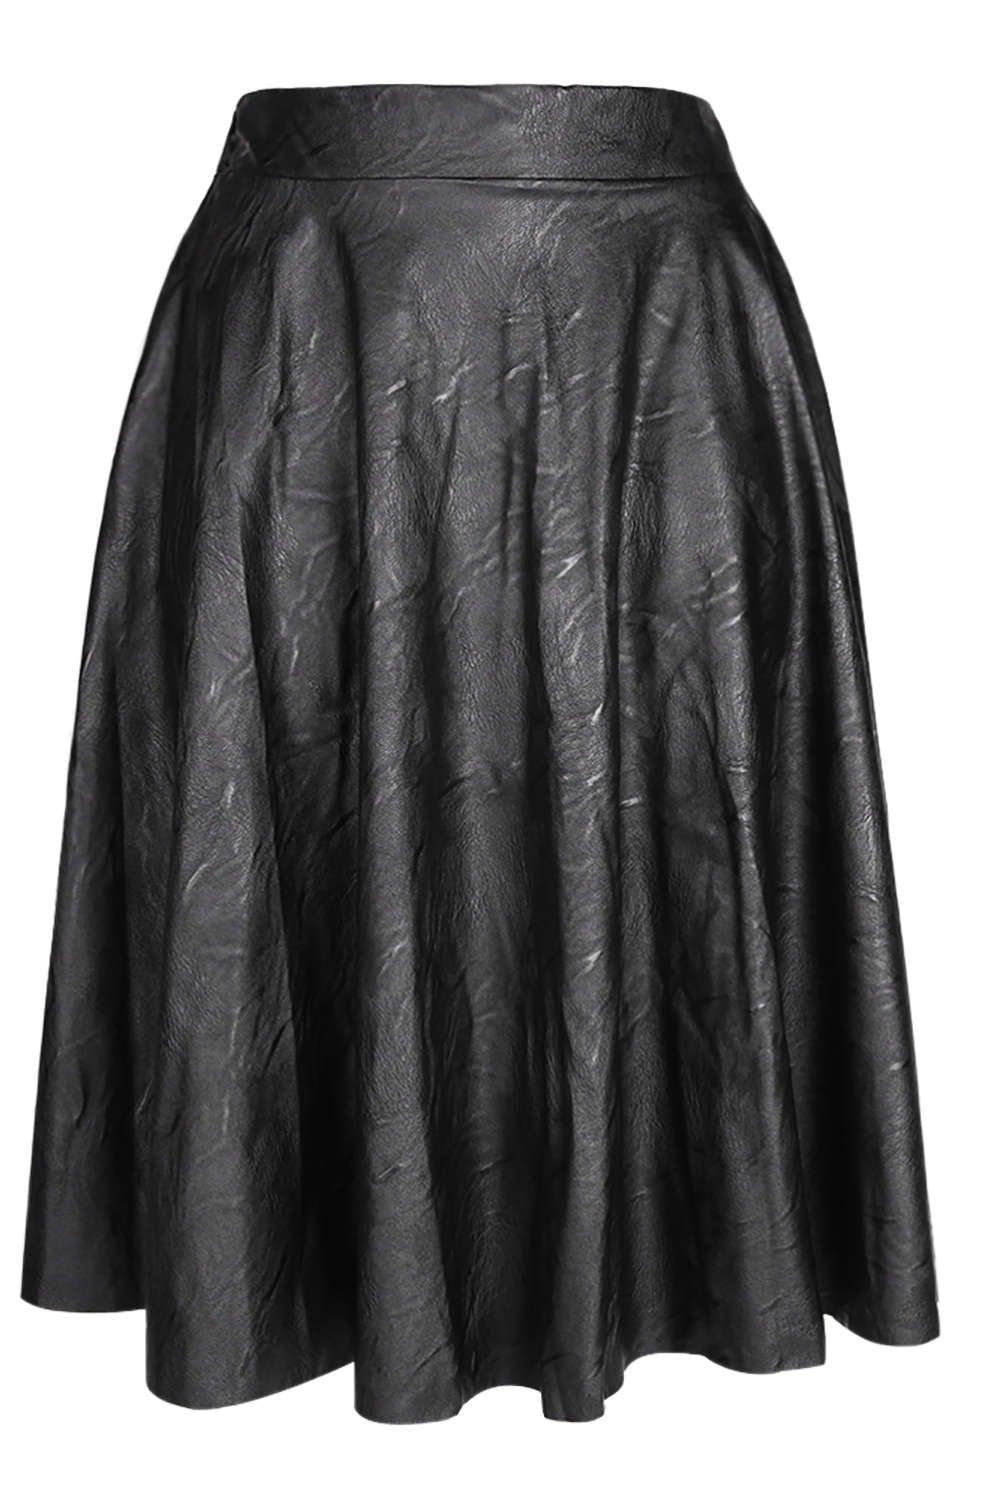 Iyasson Women Winter Faux Leather High Waist Pleated Skirt